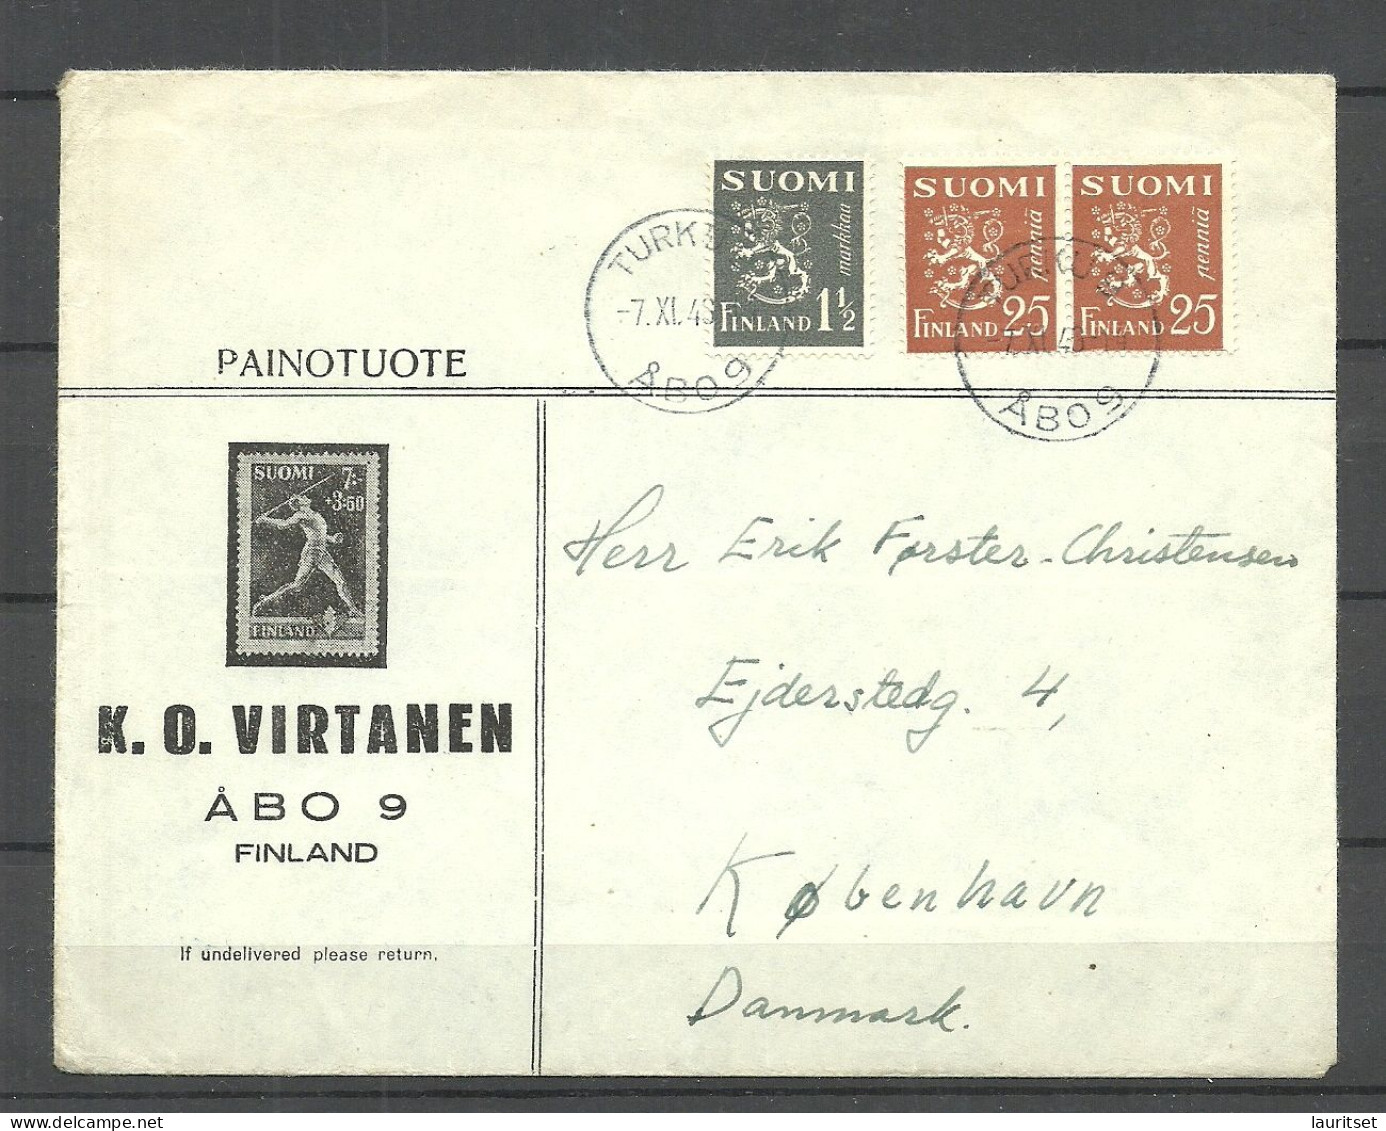 FINLAND FINNLAND Suomi 1948 O Turku 9 Commercial Cover Printed Matter To Denmark - Storia Postale